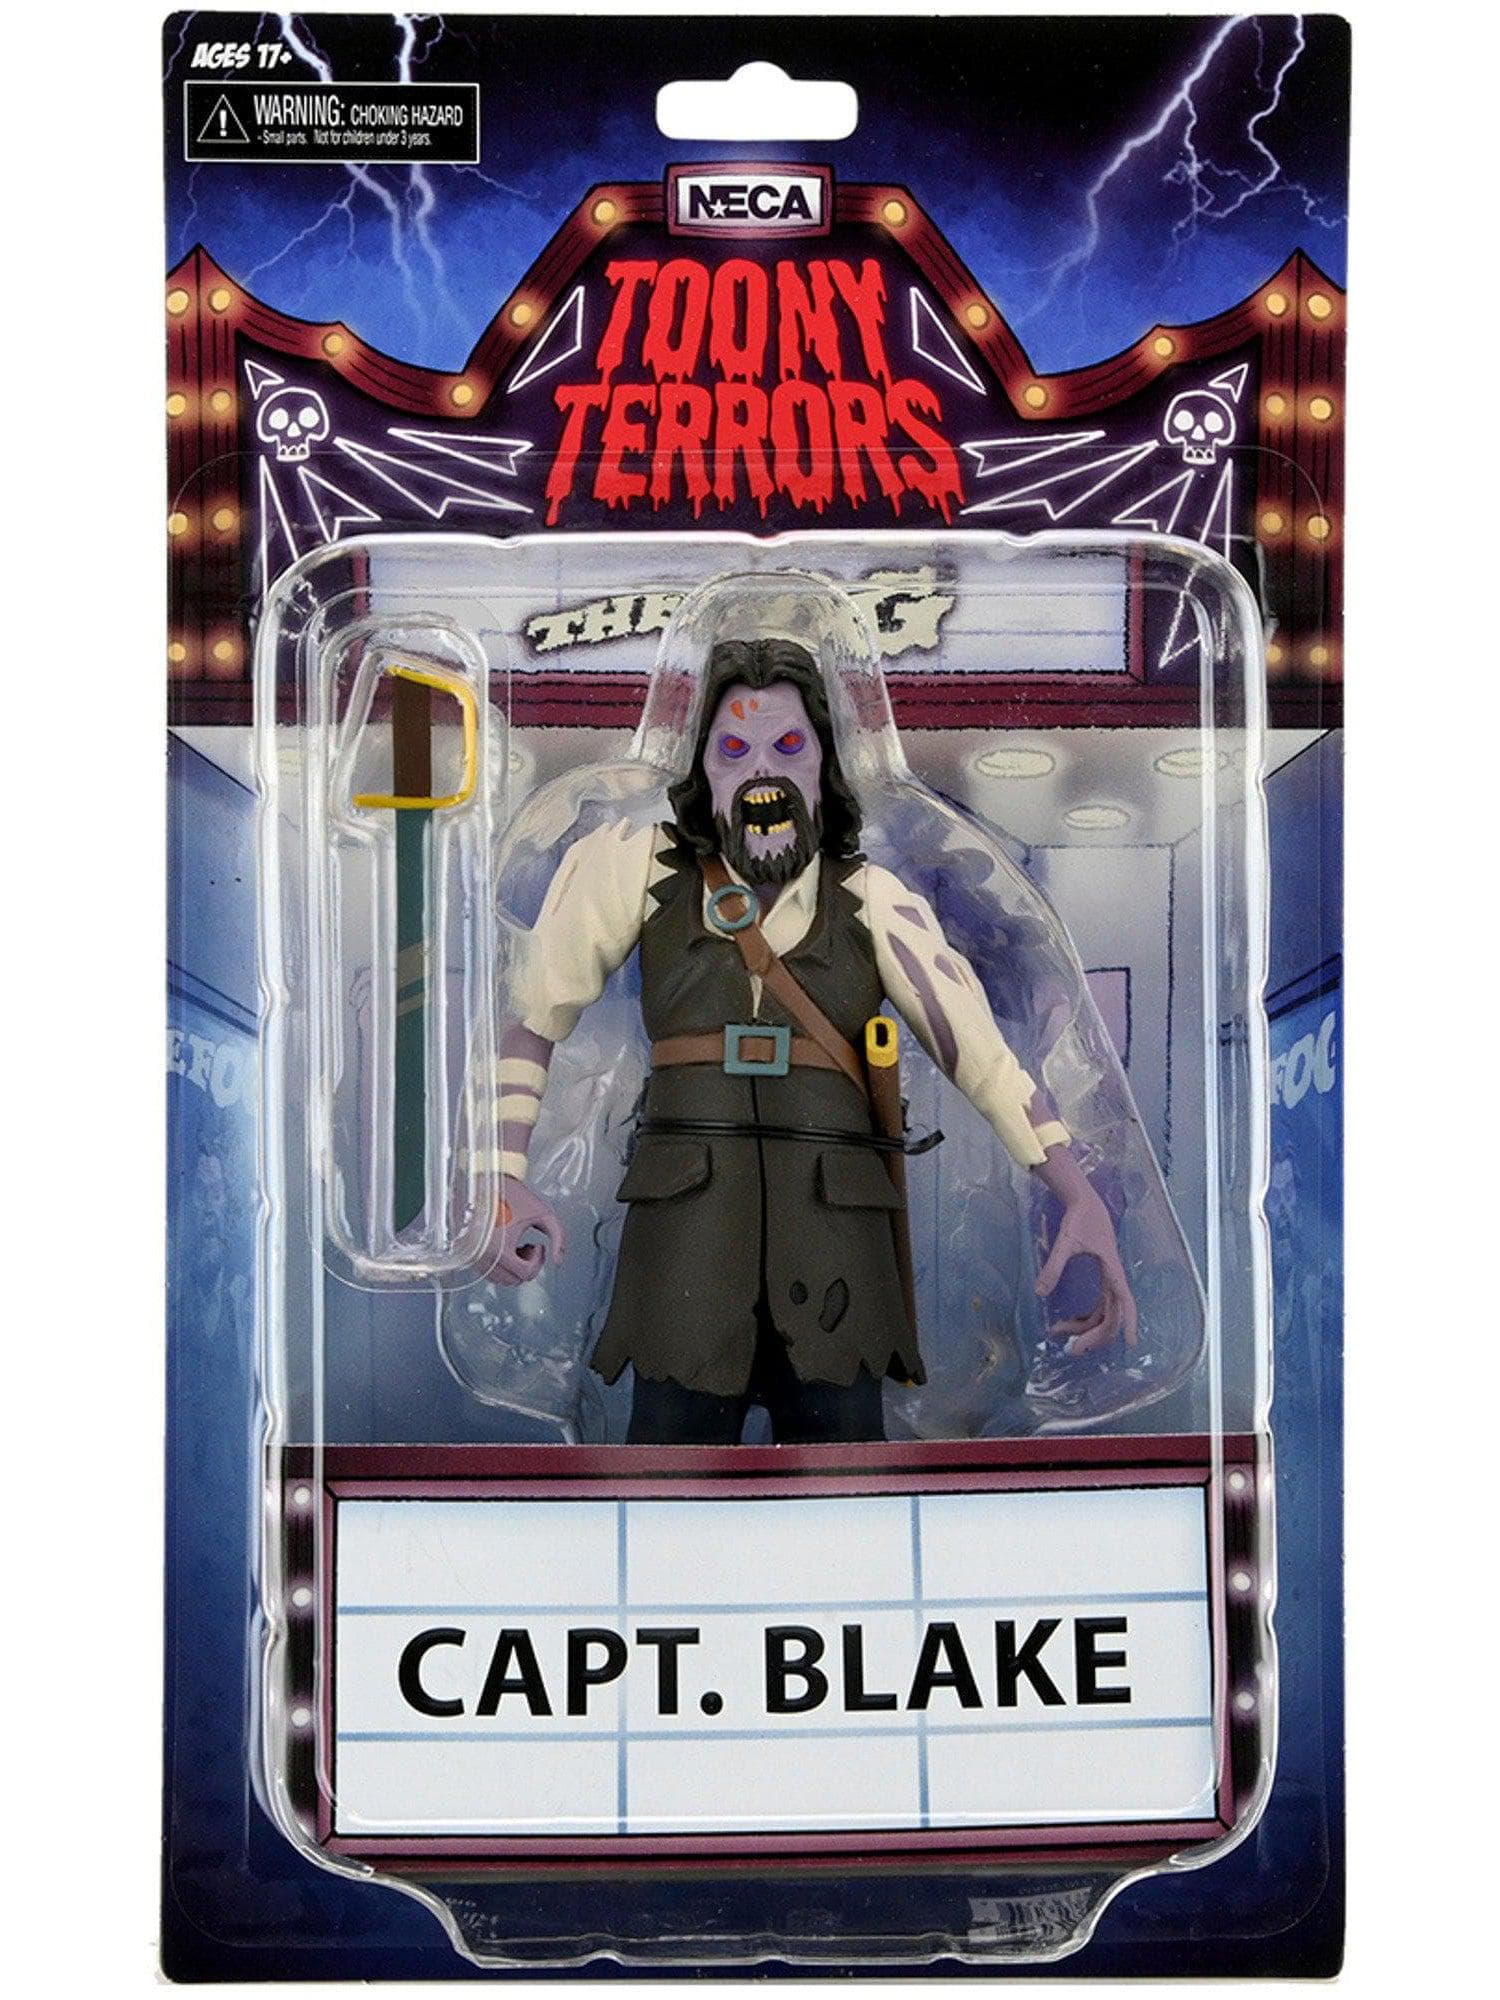 NECA - Toony Terrors - 6" Scale Action Figure - Captain Blake (The Fog) - costumes.com